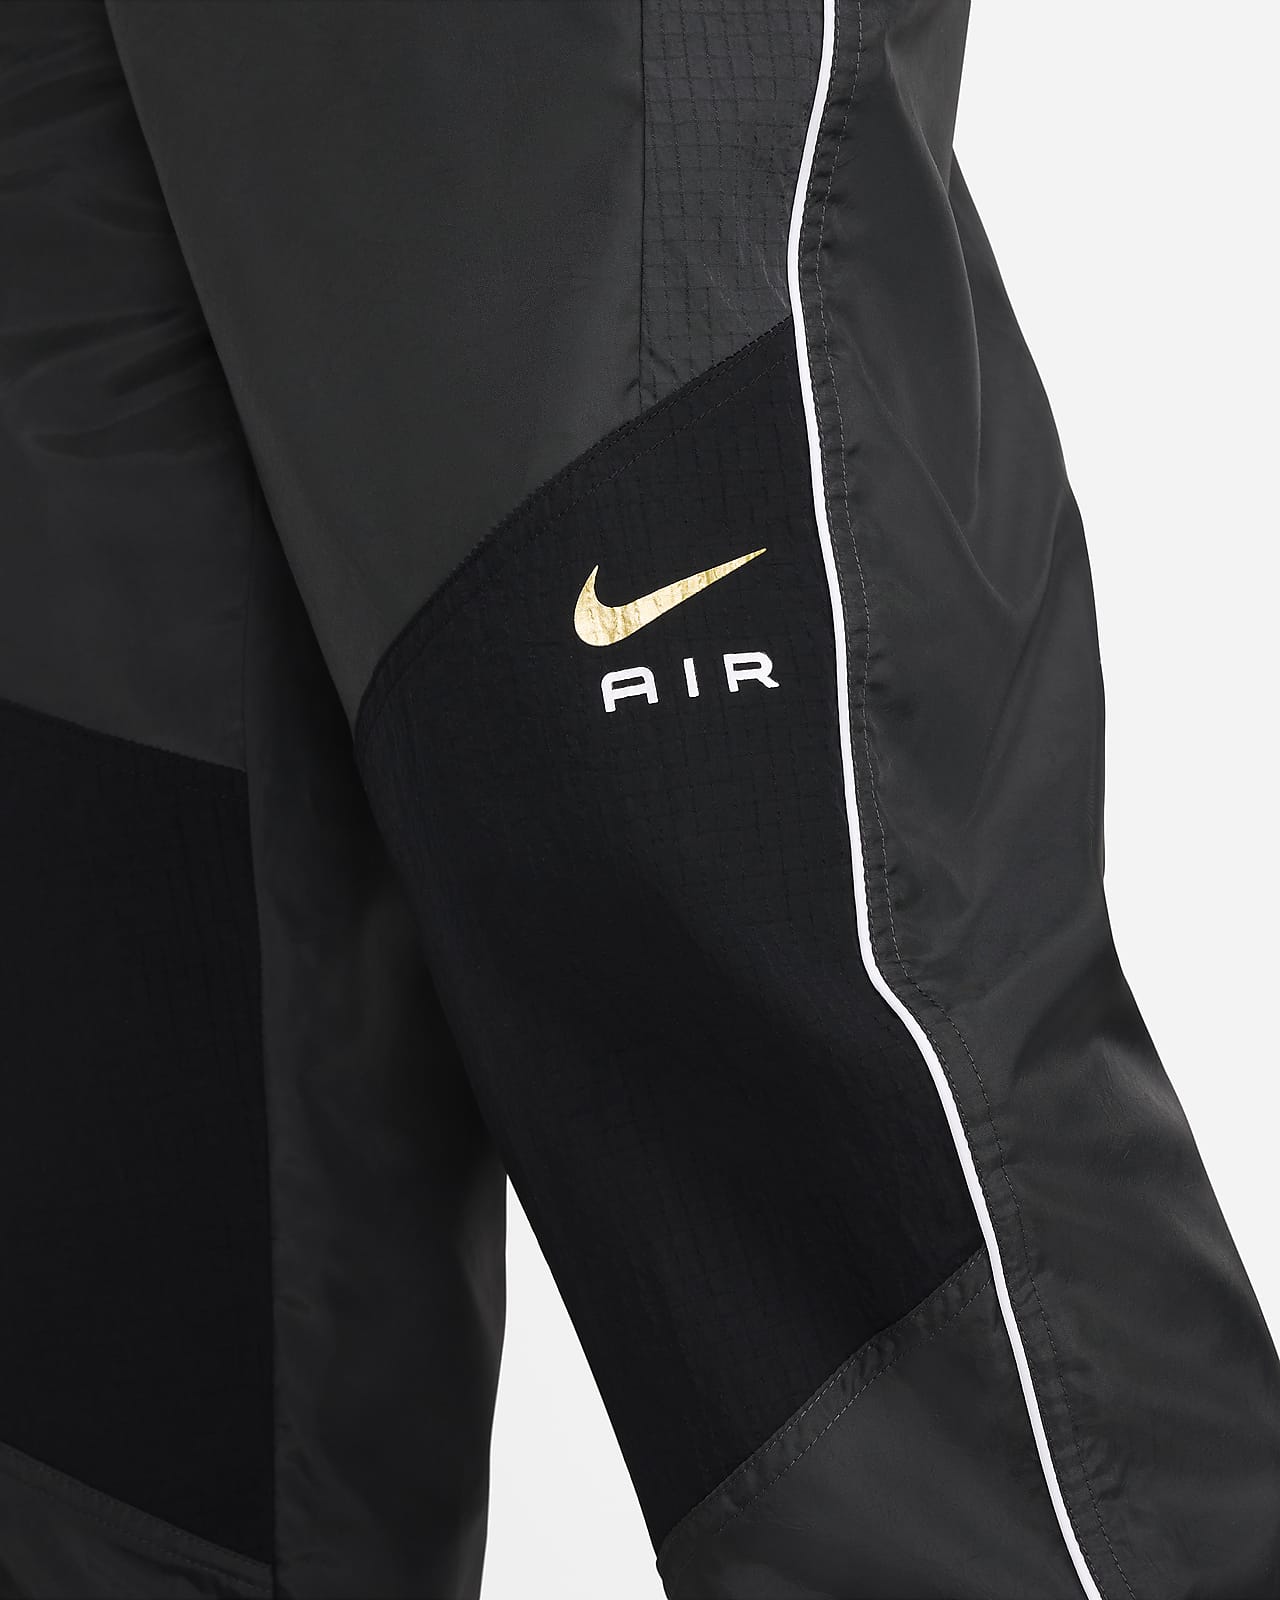 Nike Men's Run Stripe Woven Pant, Black/Reflective Silver, Medium